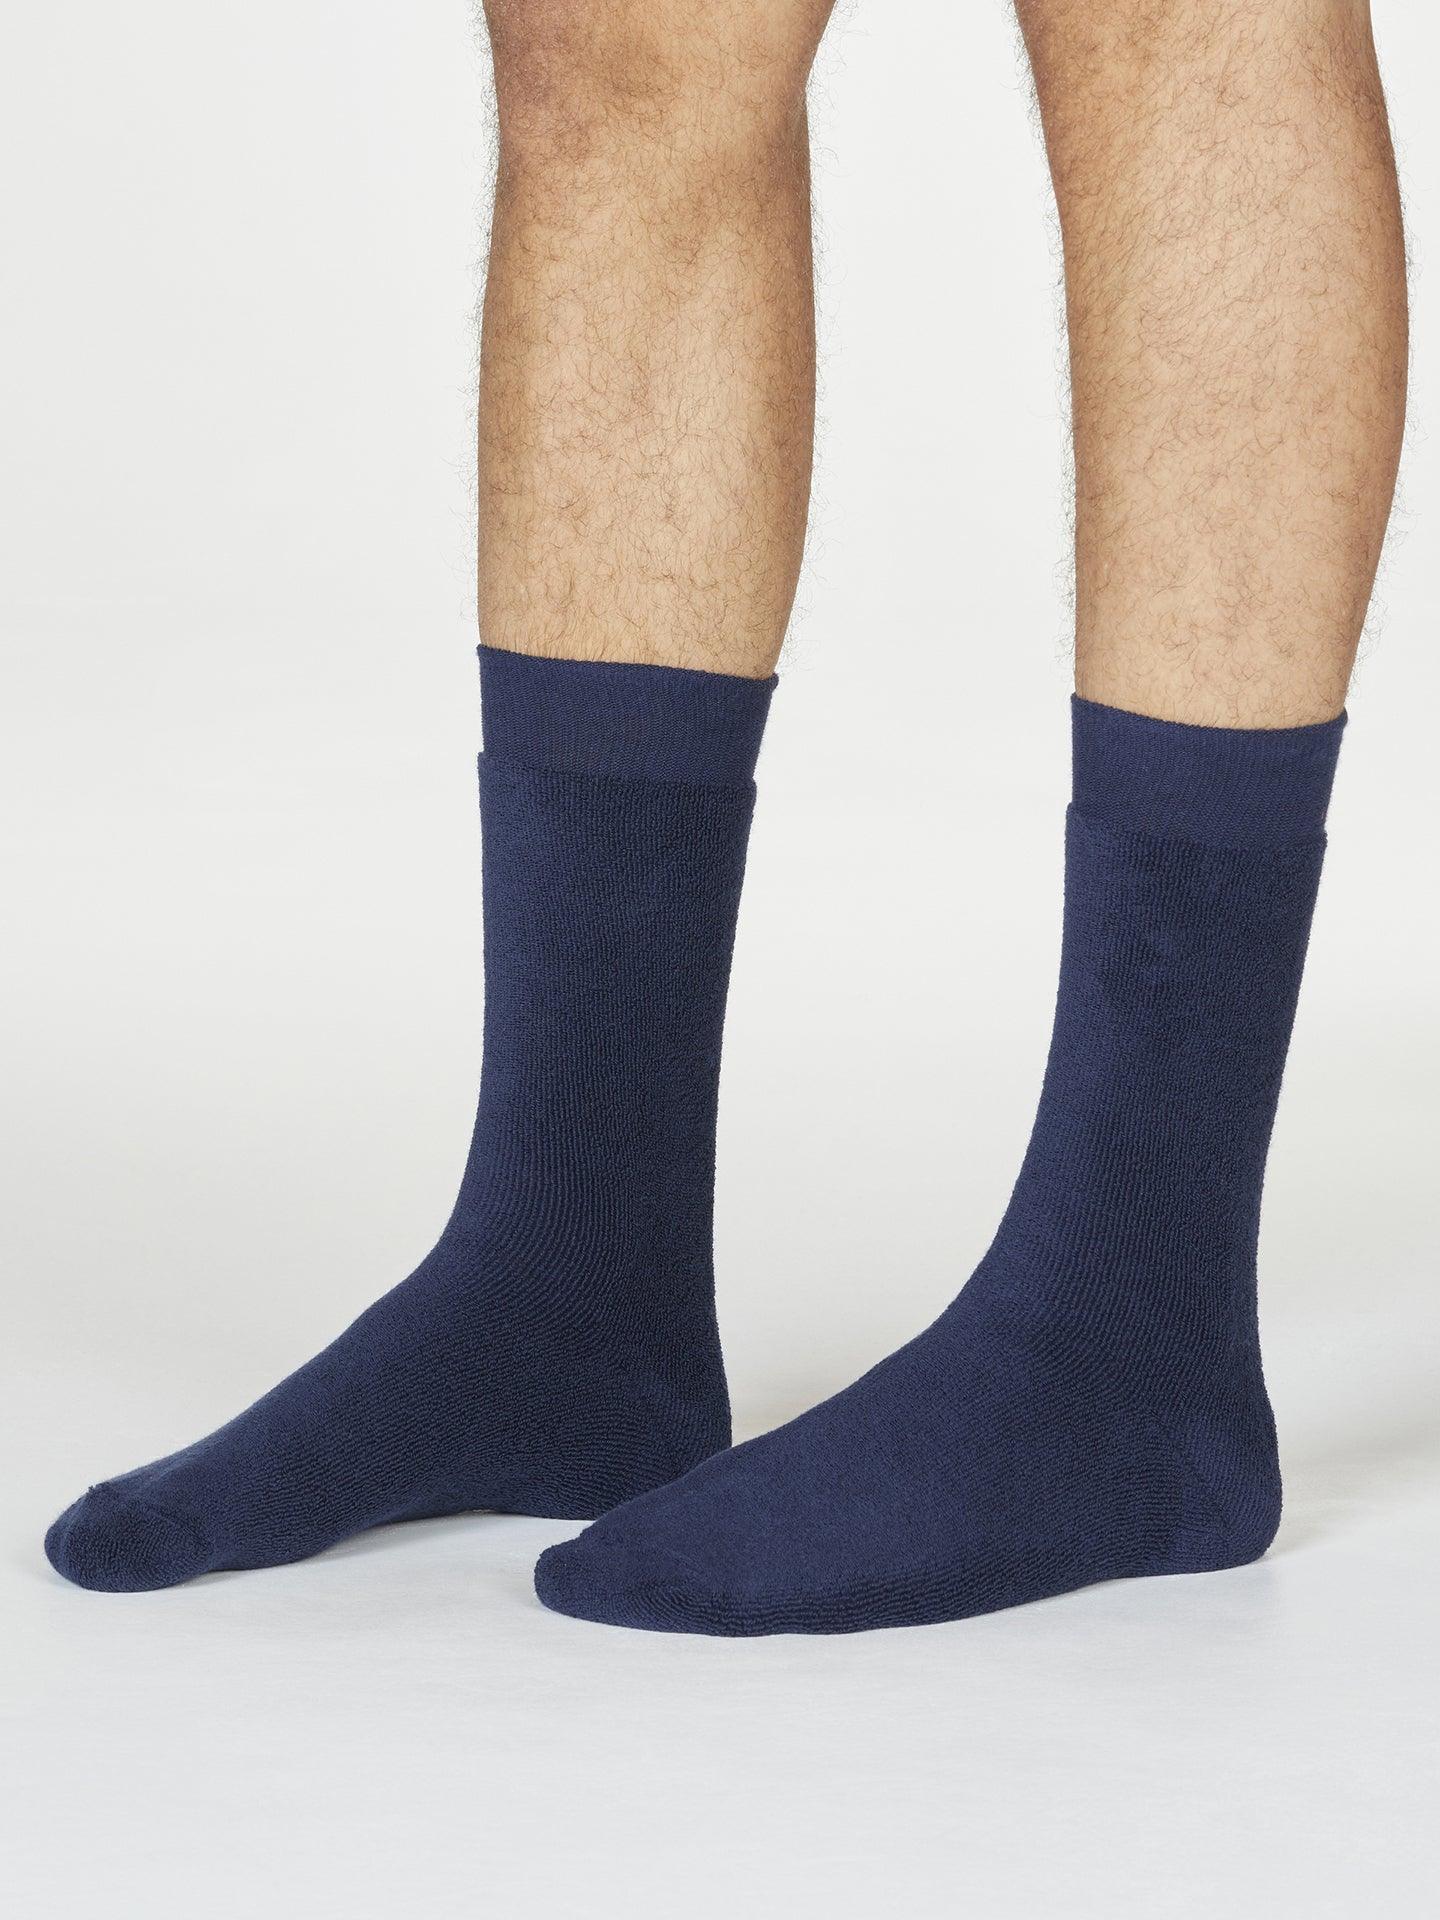 Walker Socks - Navy Blue - Thought Clothing UK